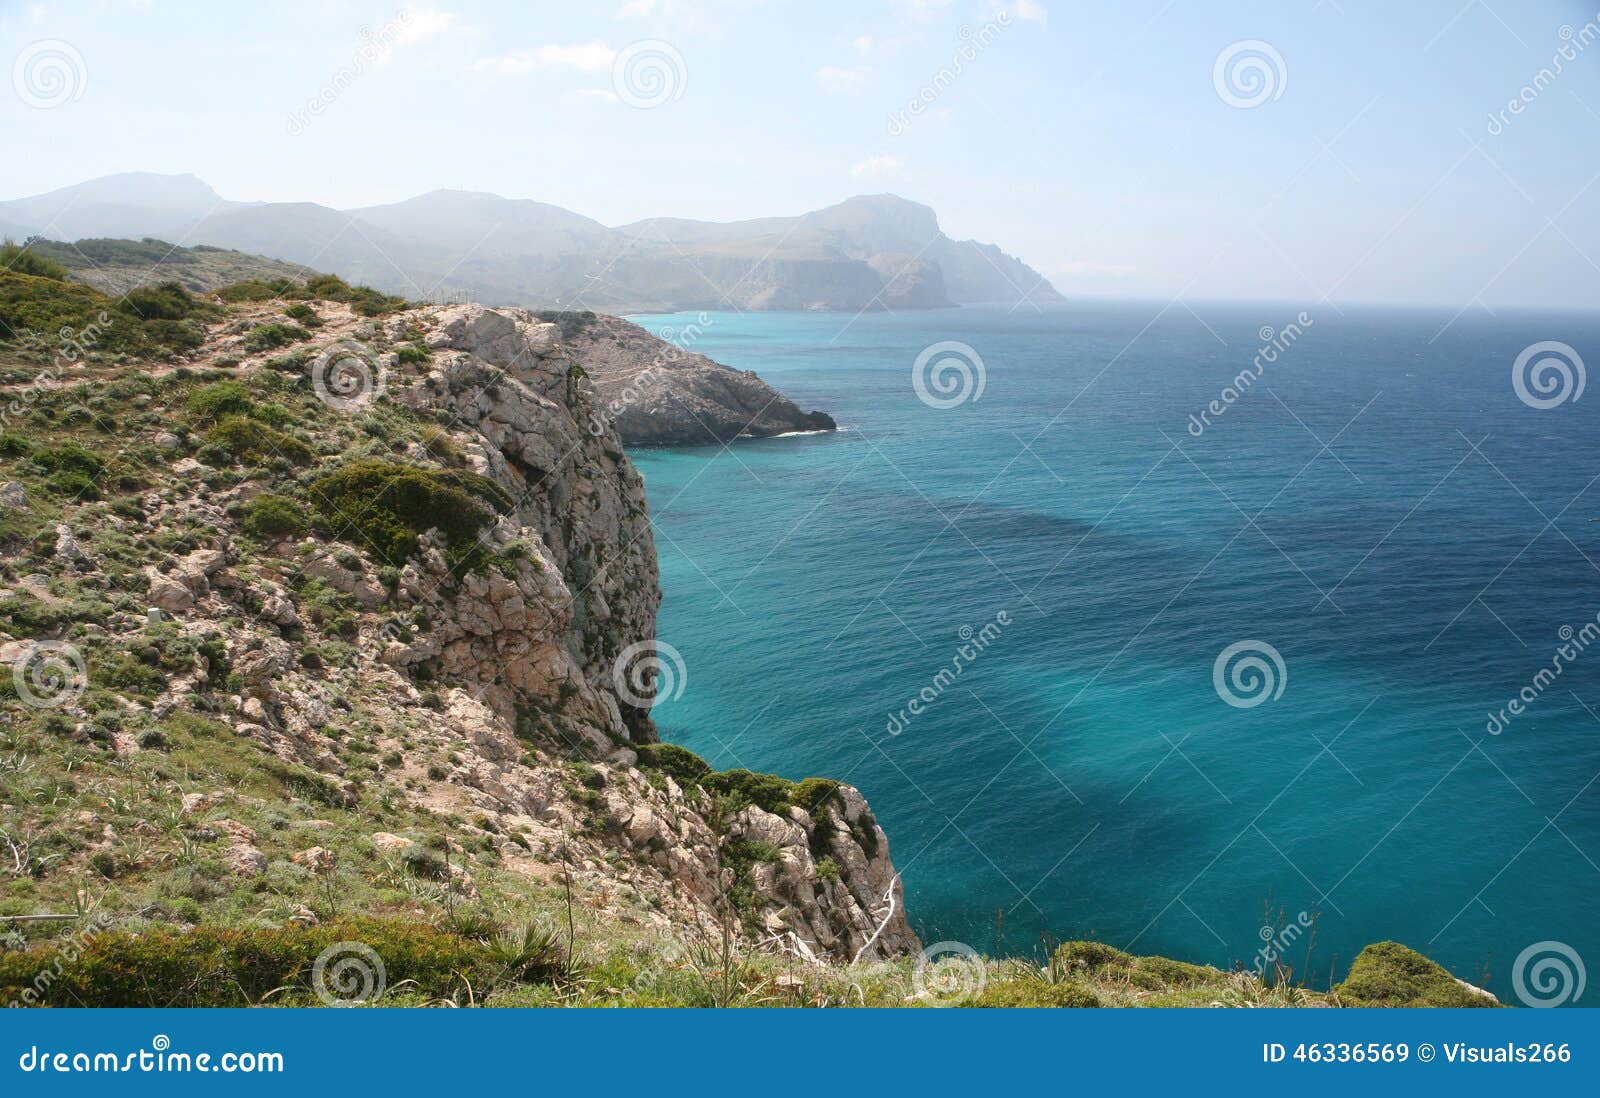 East of Mallorca, Spain Image - Image of island,